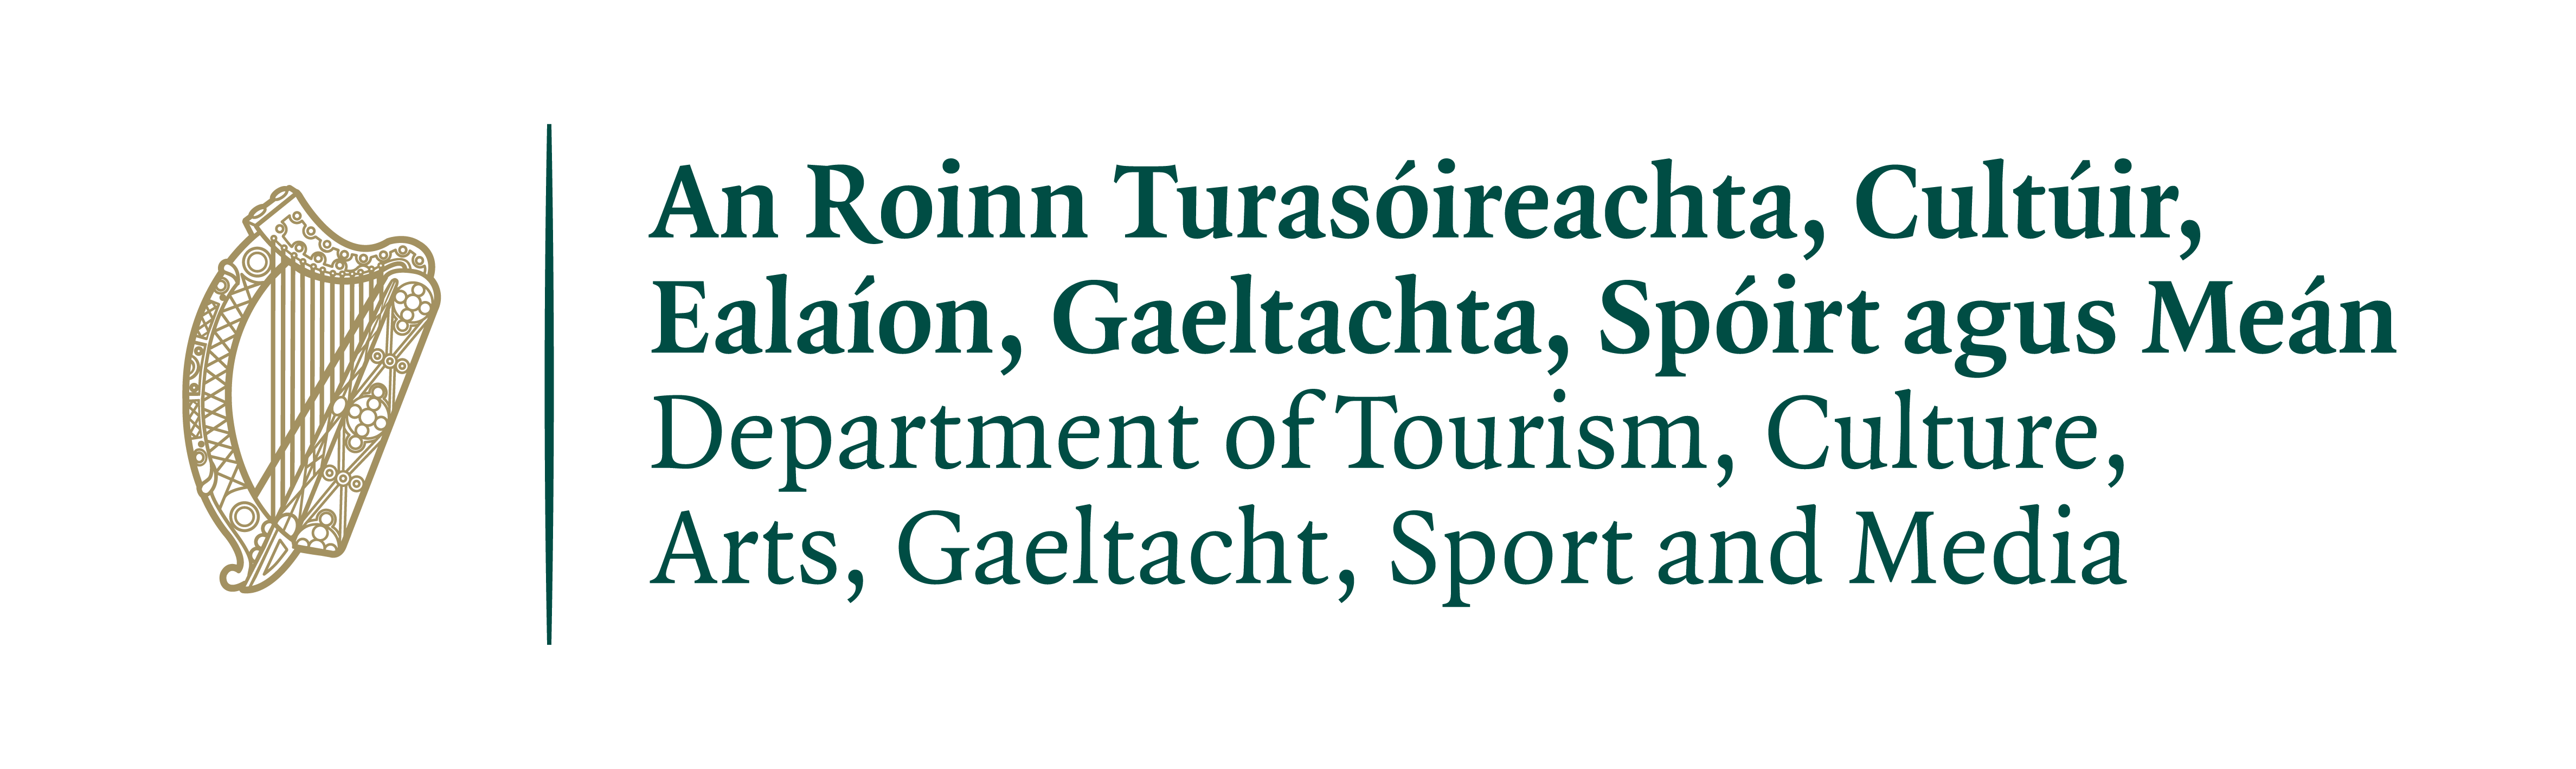 Dept. Tourism, Culture, Arts, Gaeltacht, Sport, Media_Standard_Standard (3)